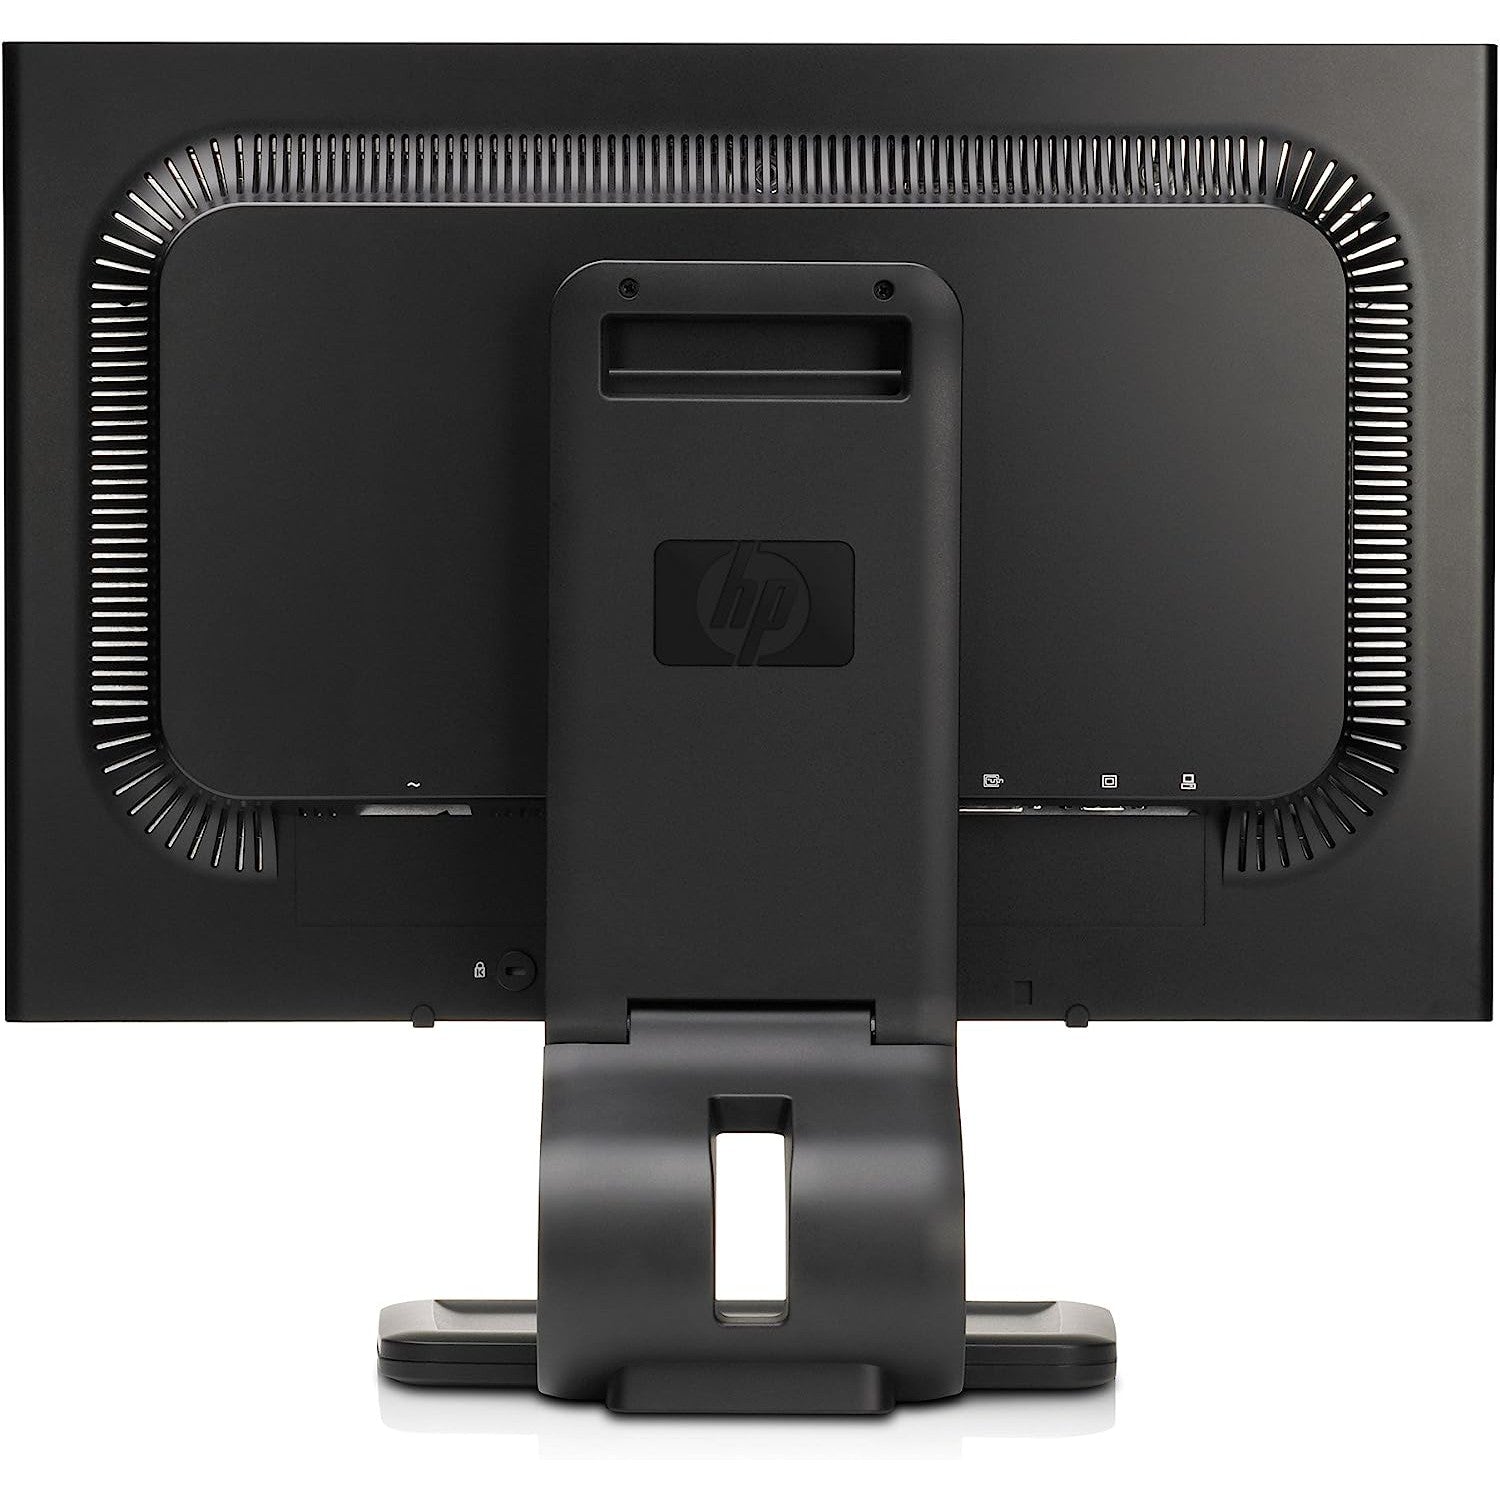 HP LA2405WG 24" Widescreen LCD Monitor - Black - Refurbished Good